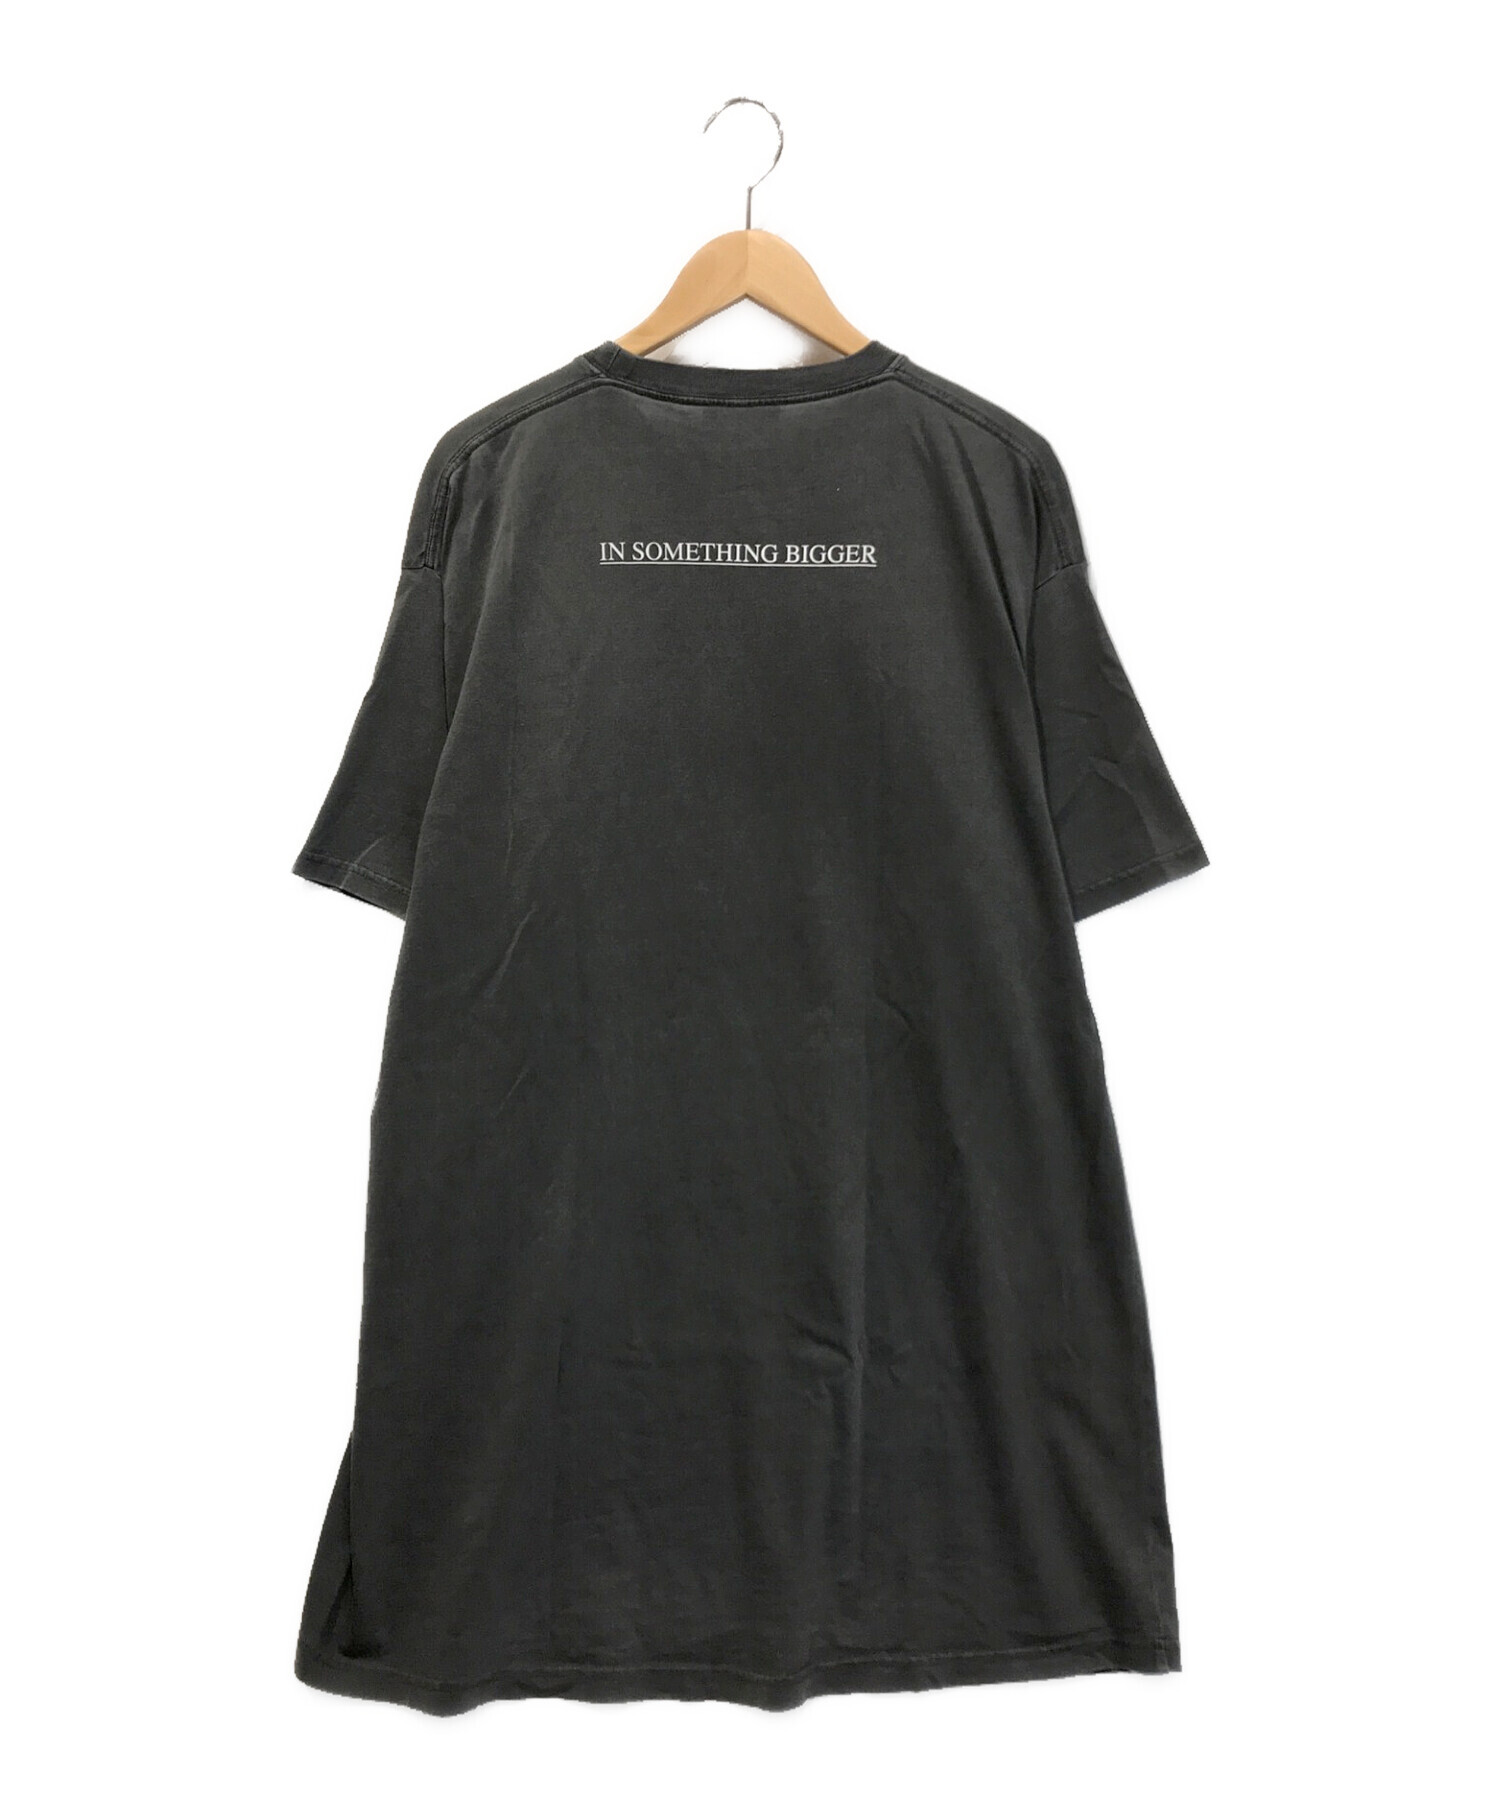 BALENCIAGA (バレンシアガ) BELIEVE Tシャツ グレー サイズ:S